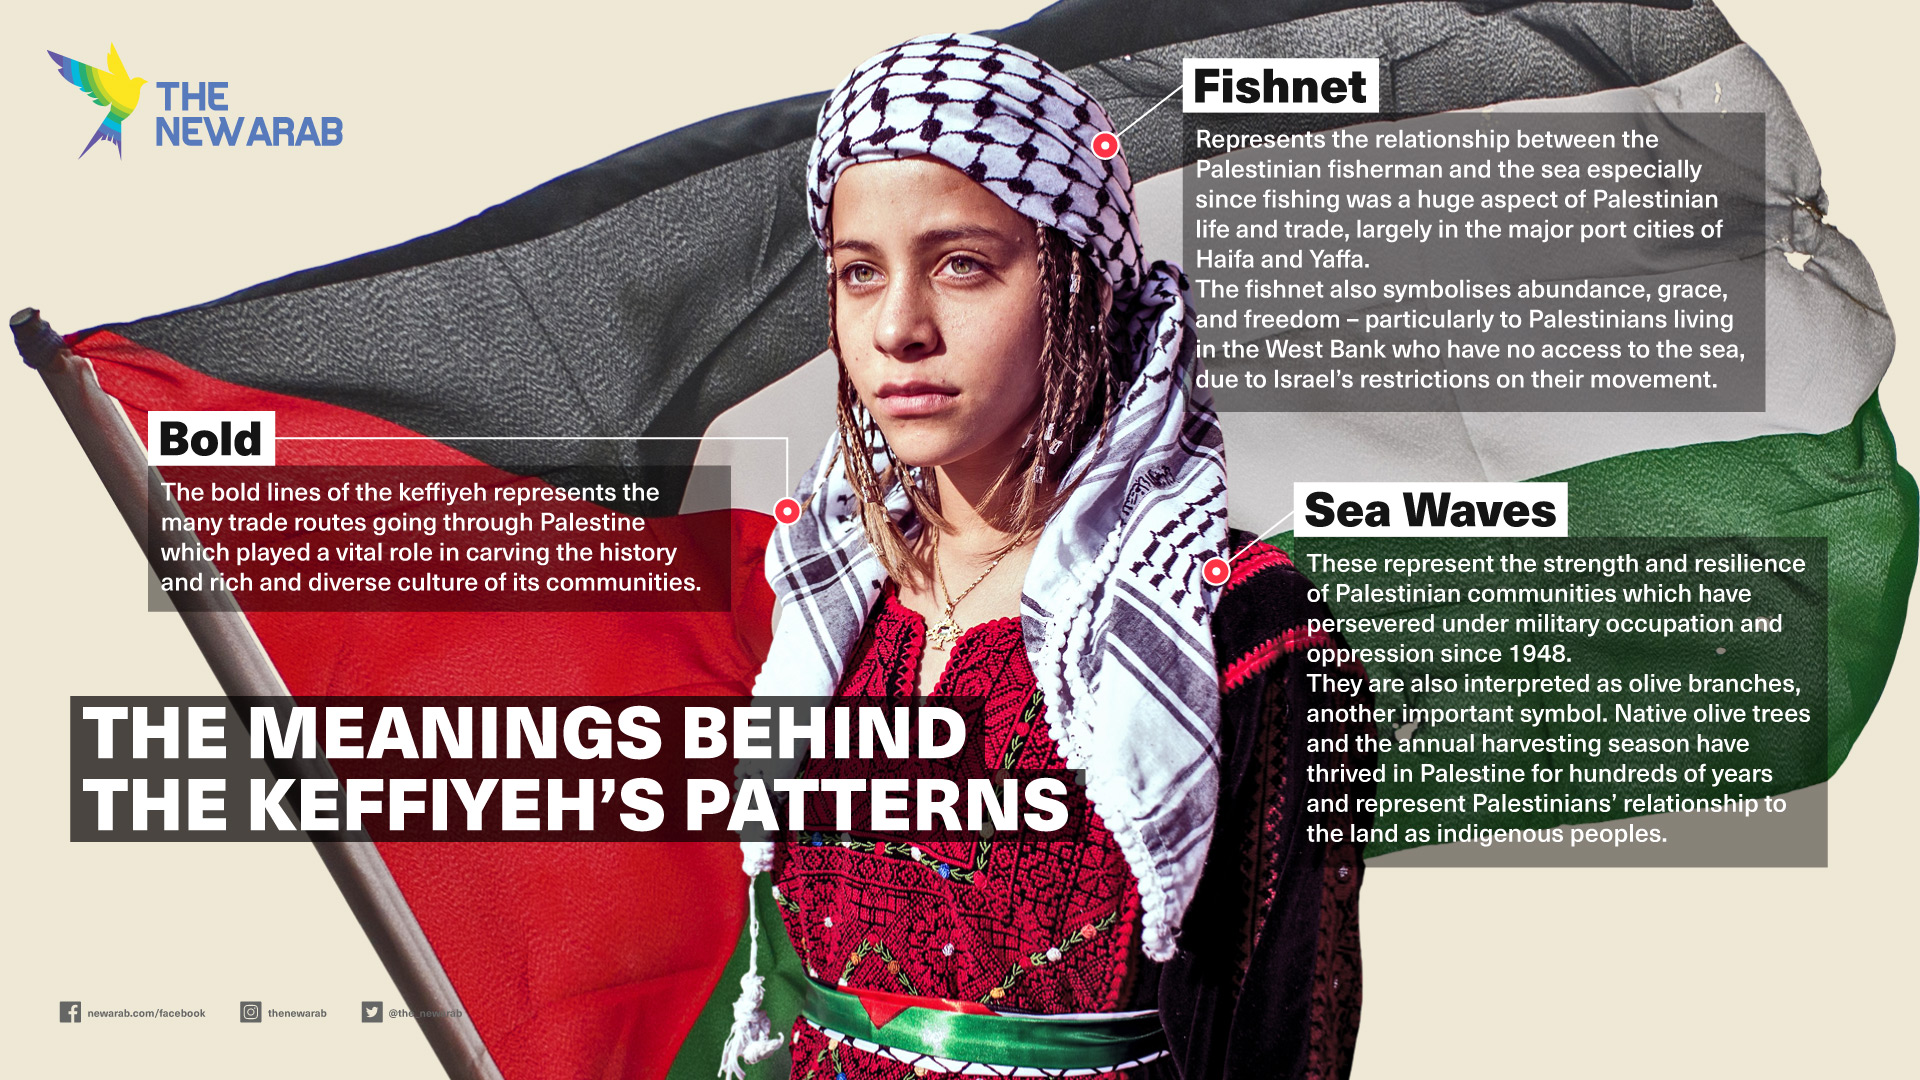 I love Palestinian kefiyeh scarves. I often check the latest